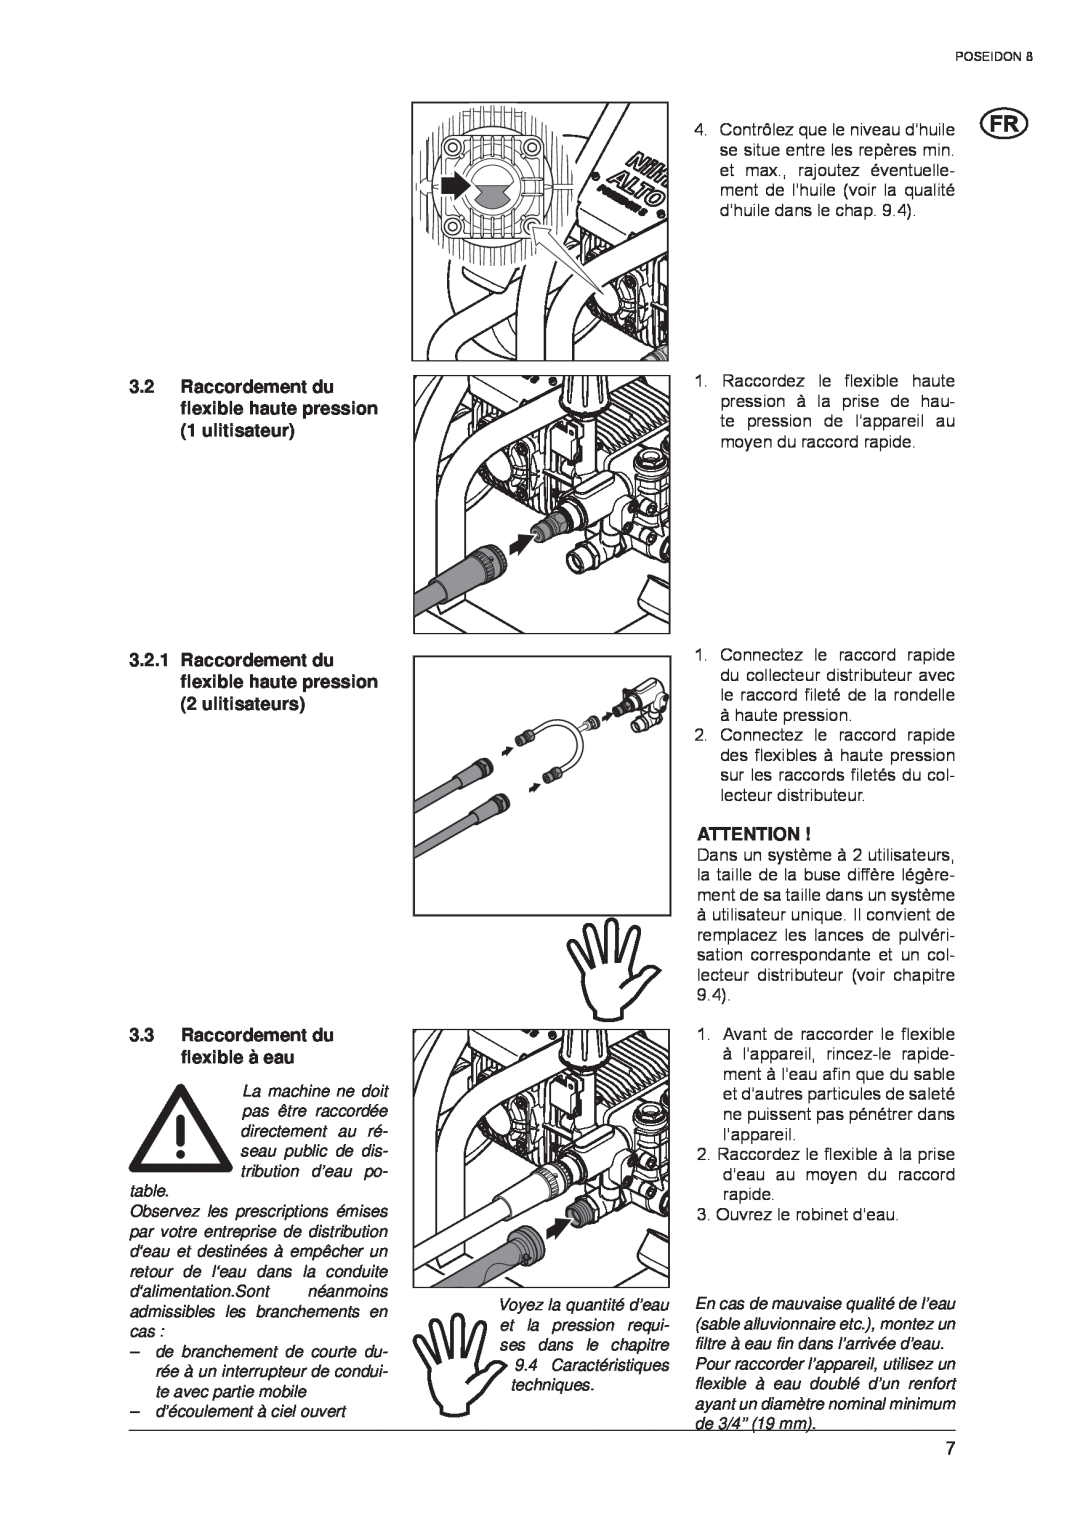 Nilfisk-ALTO POSEIDON 8 manual 3.3Raccordement du flexible à eau 